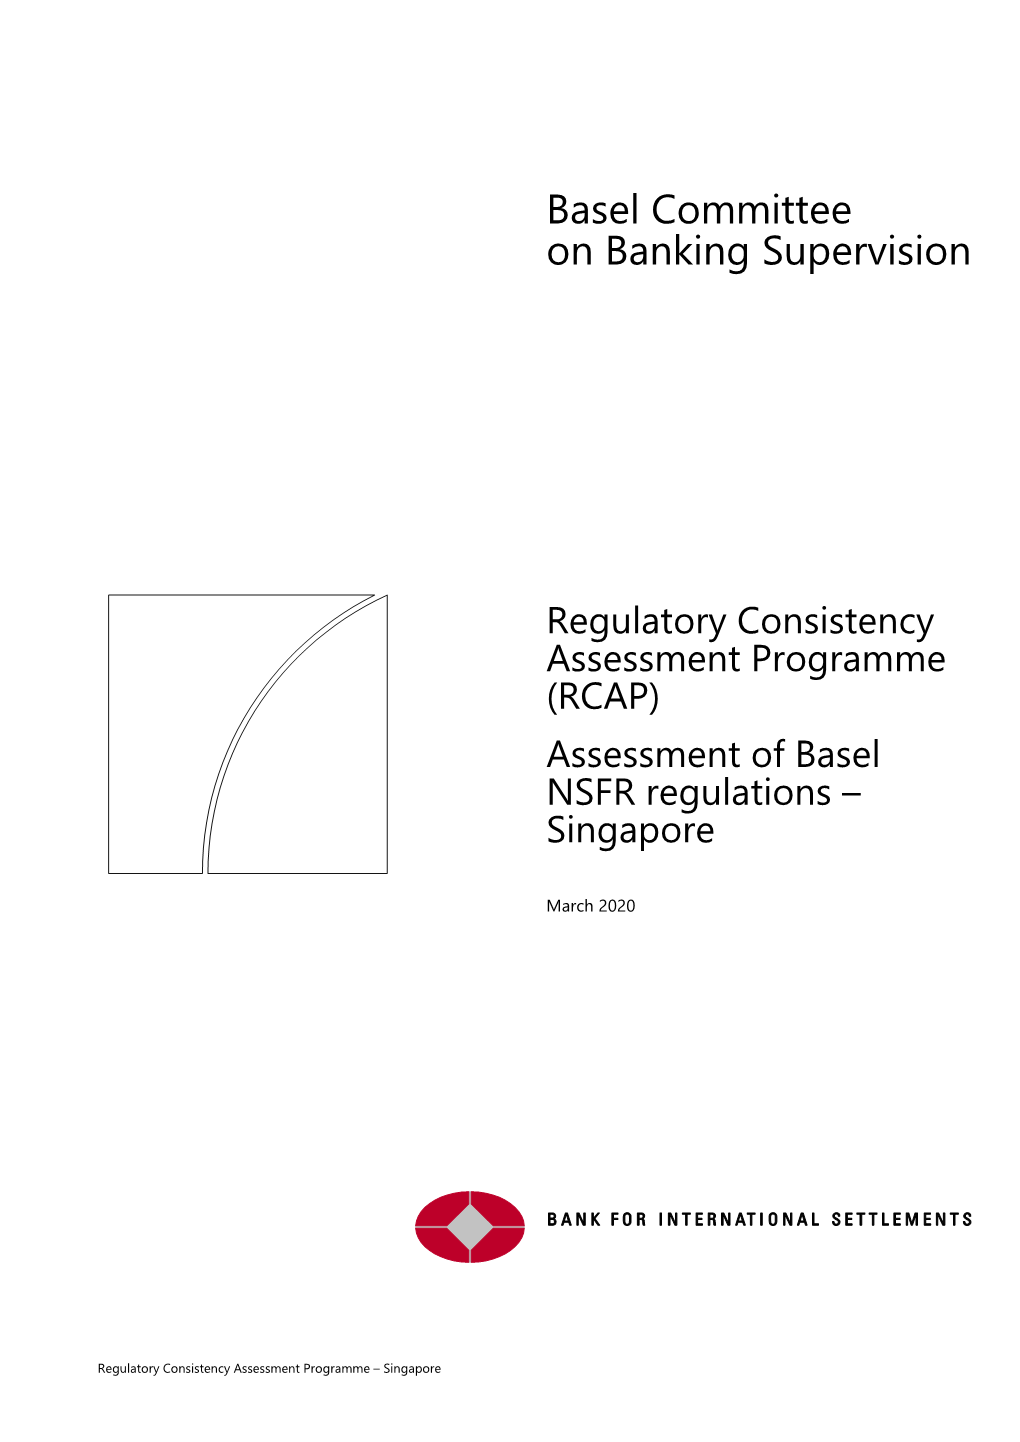 (RCAP) Assessment of Basel NSFR Regulations – Singapore